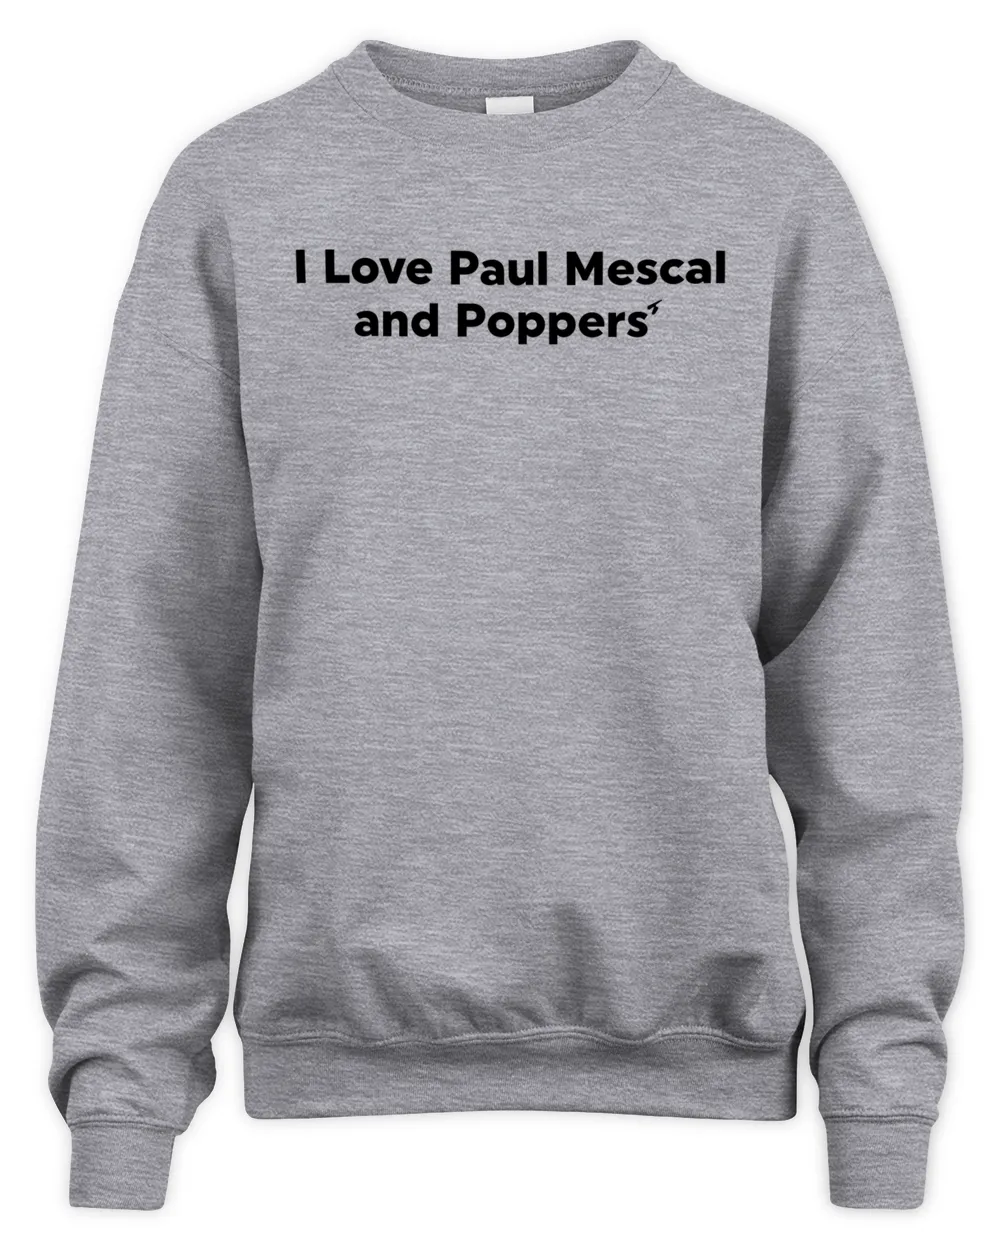 I Love Paul Mescal And Poppers' Tee Shirt Unisex Sweatshirt sport-grey 